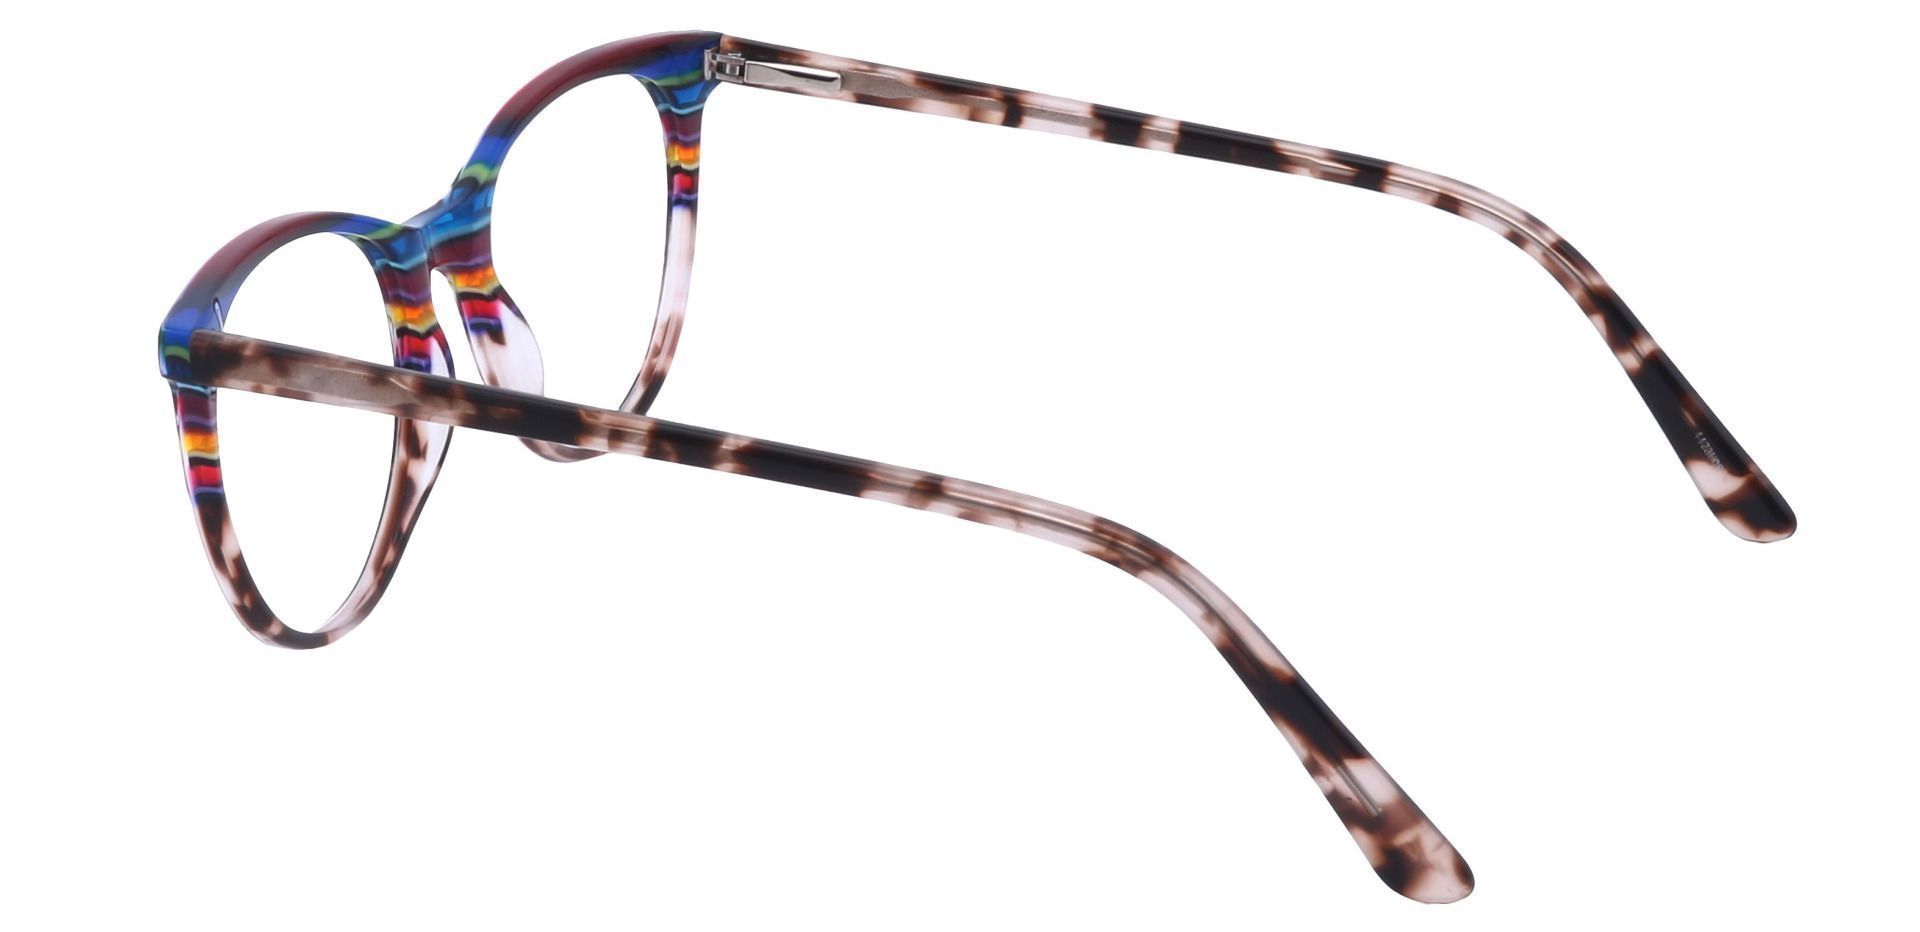 Patagonia Oval Eyeglasses Frame - Multi Colored Stripes